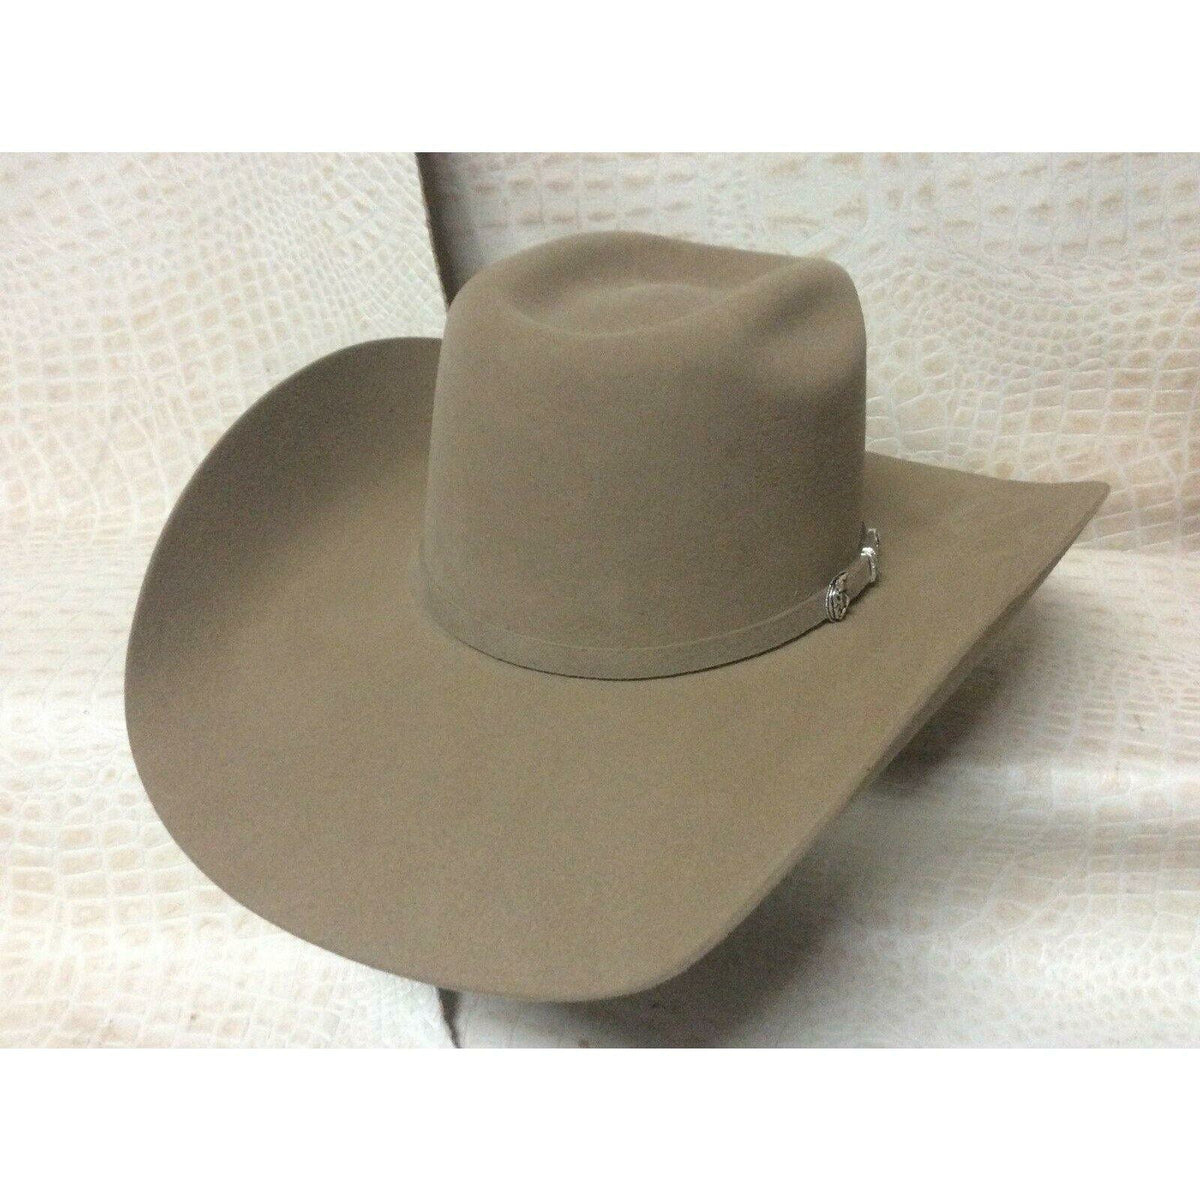 Resistol | 6X Cody Johnson The SP Black Cowboy Hat, 7 1/8 / Black